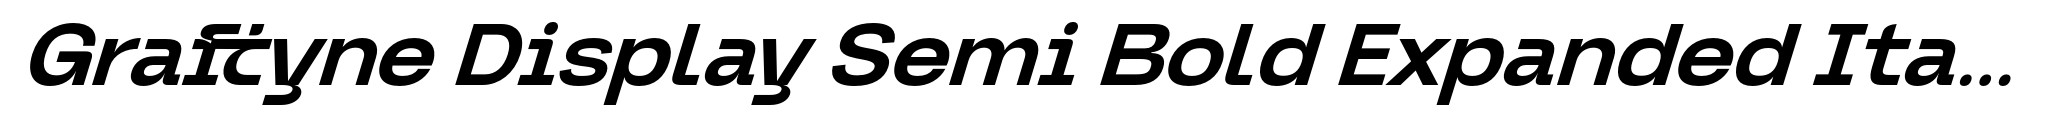 Graftyne Display Semi Bold Expanded Italic image